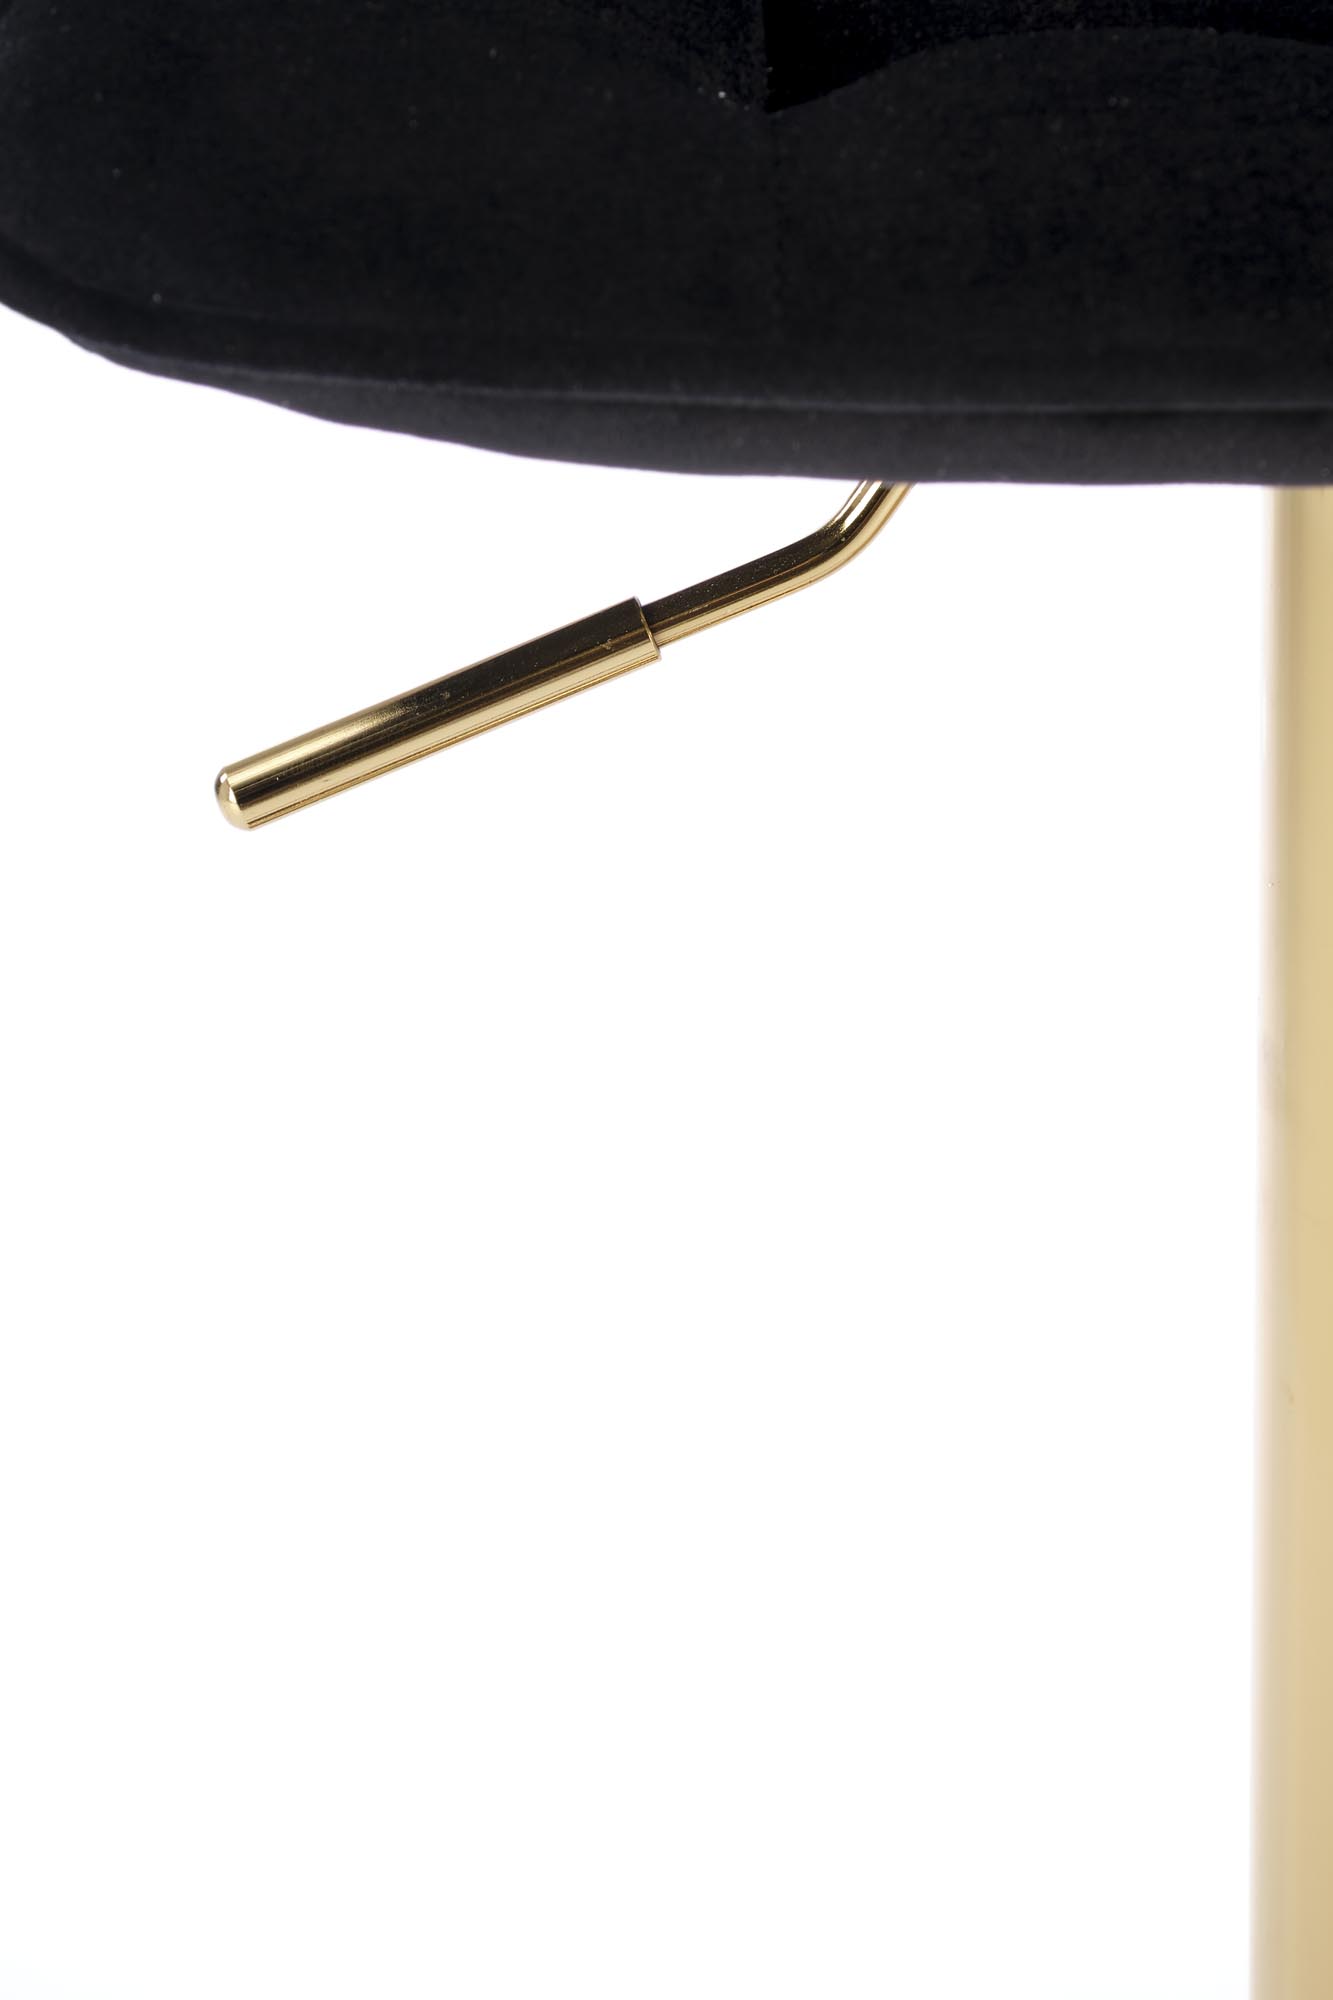 Scaun de bar H120 tapițat - Picior - auriu, Scaun - negru Barová židle čalouněná h120 - Černý / Žlutý